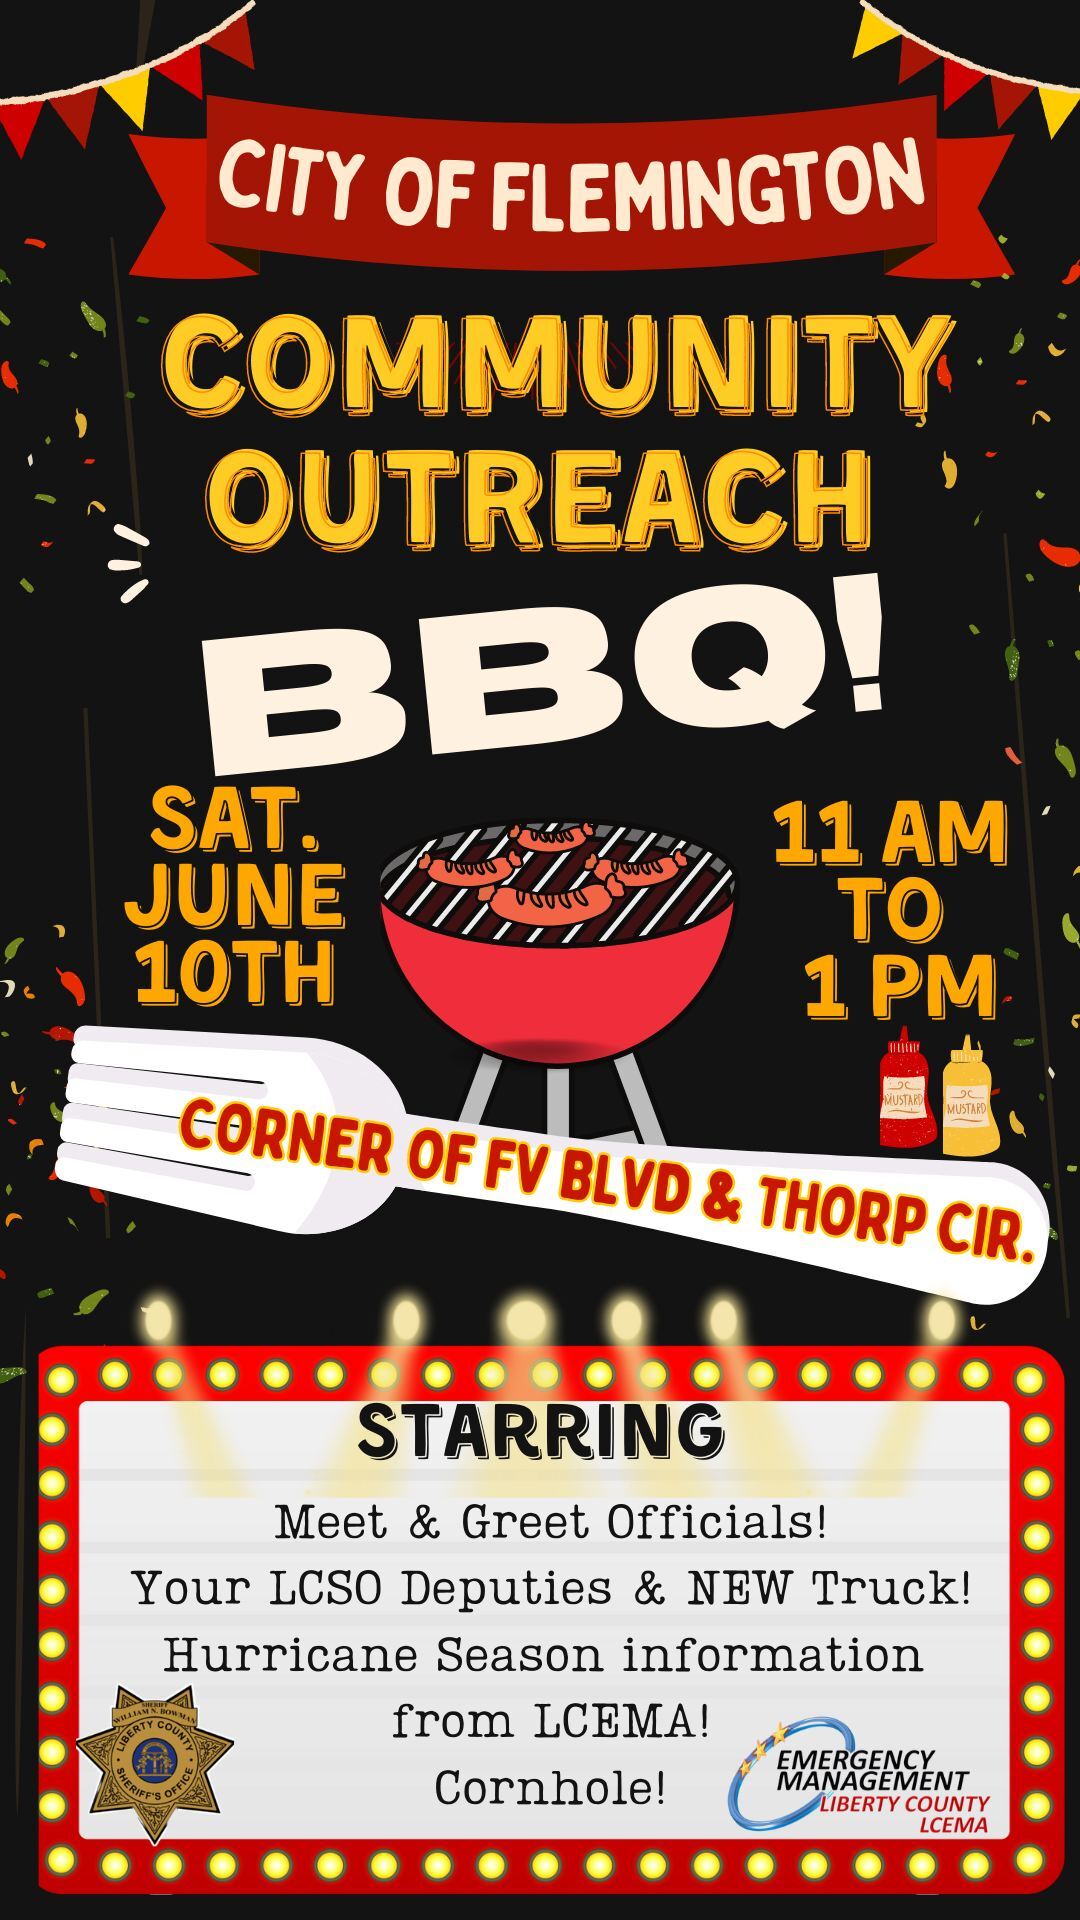 Community Outreach BBQ flyer